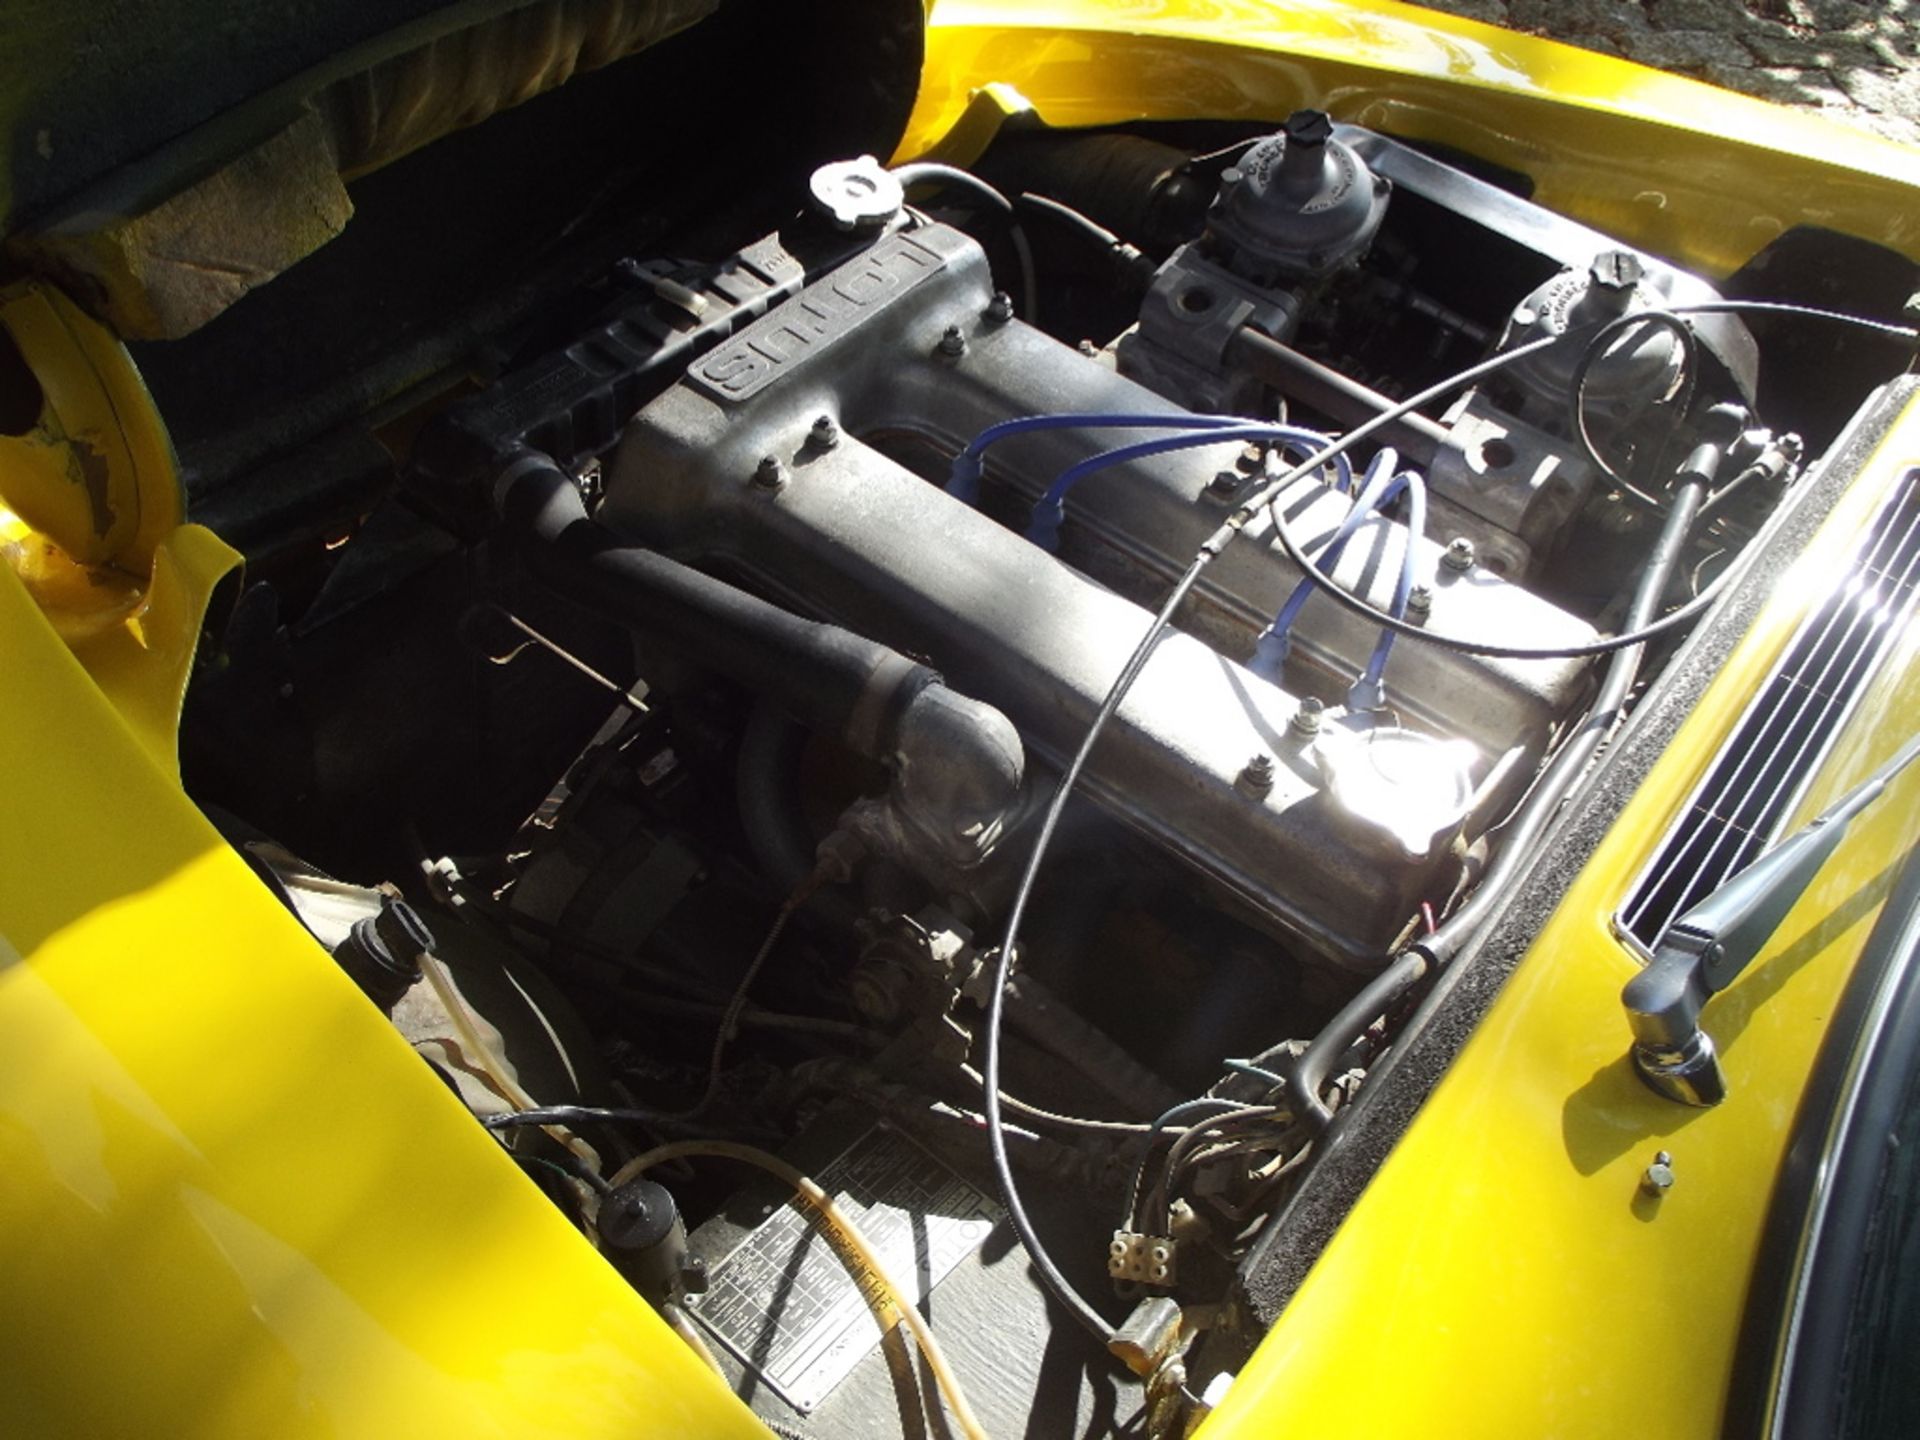 A 1971 Lotus Elan S4 drop head coupé, registration number JWY 611J, chassis number 7004080029C, - Image 3 of 3